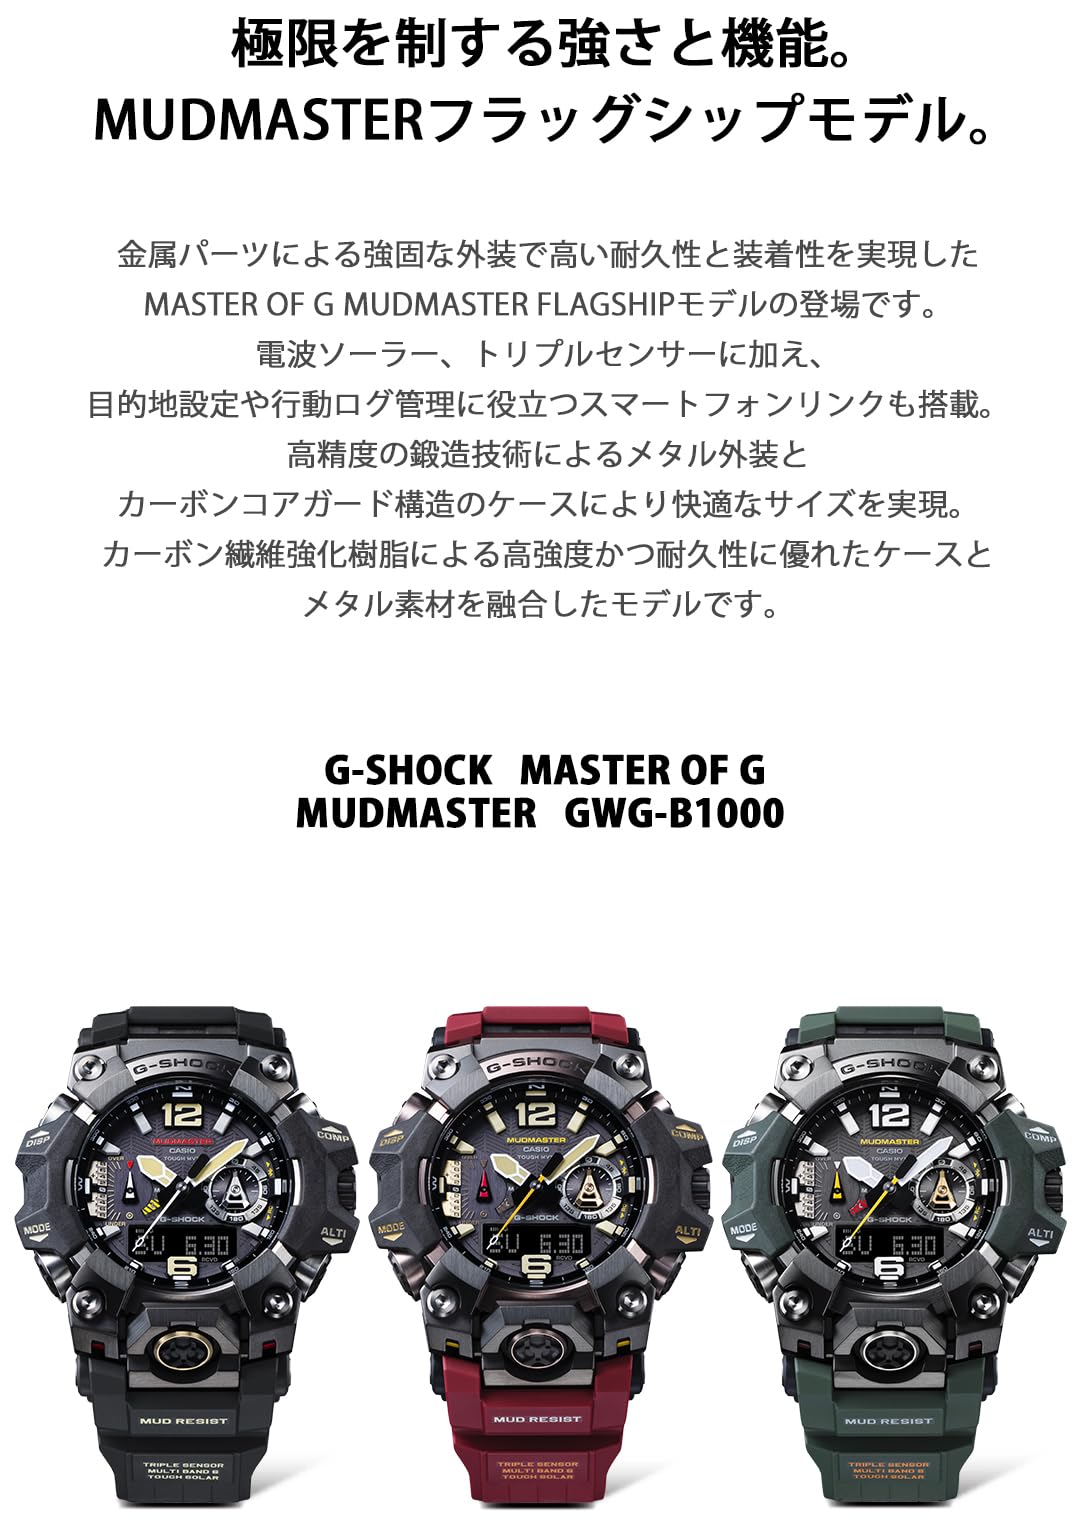 Casio G-Shock GWG-B1000-1AJF Master of G Series MUDMASTER Flagship Model Triple Sensor Japan Import New